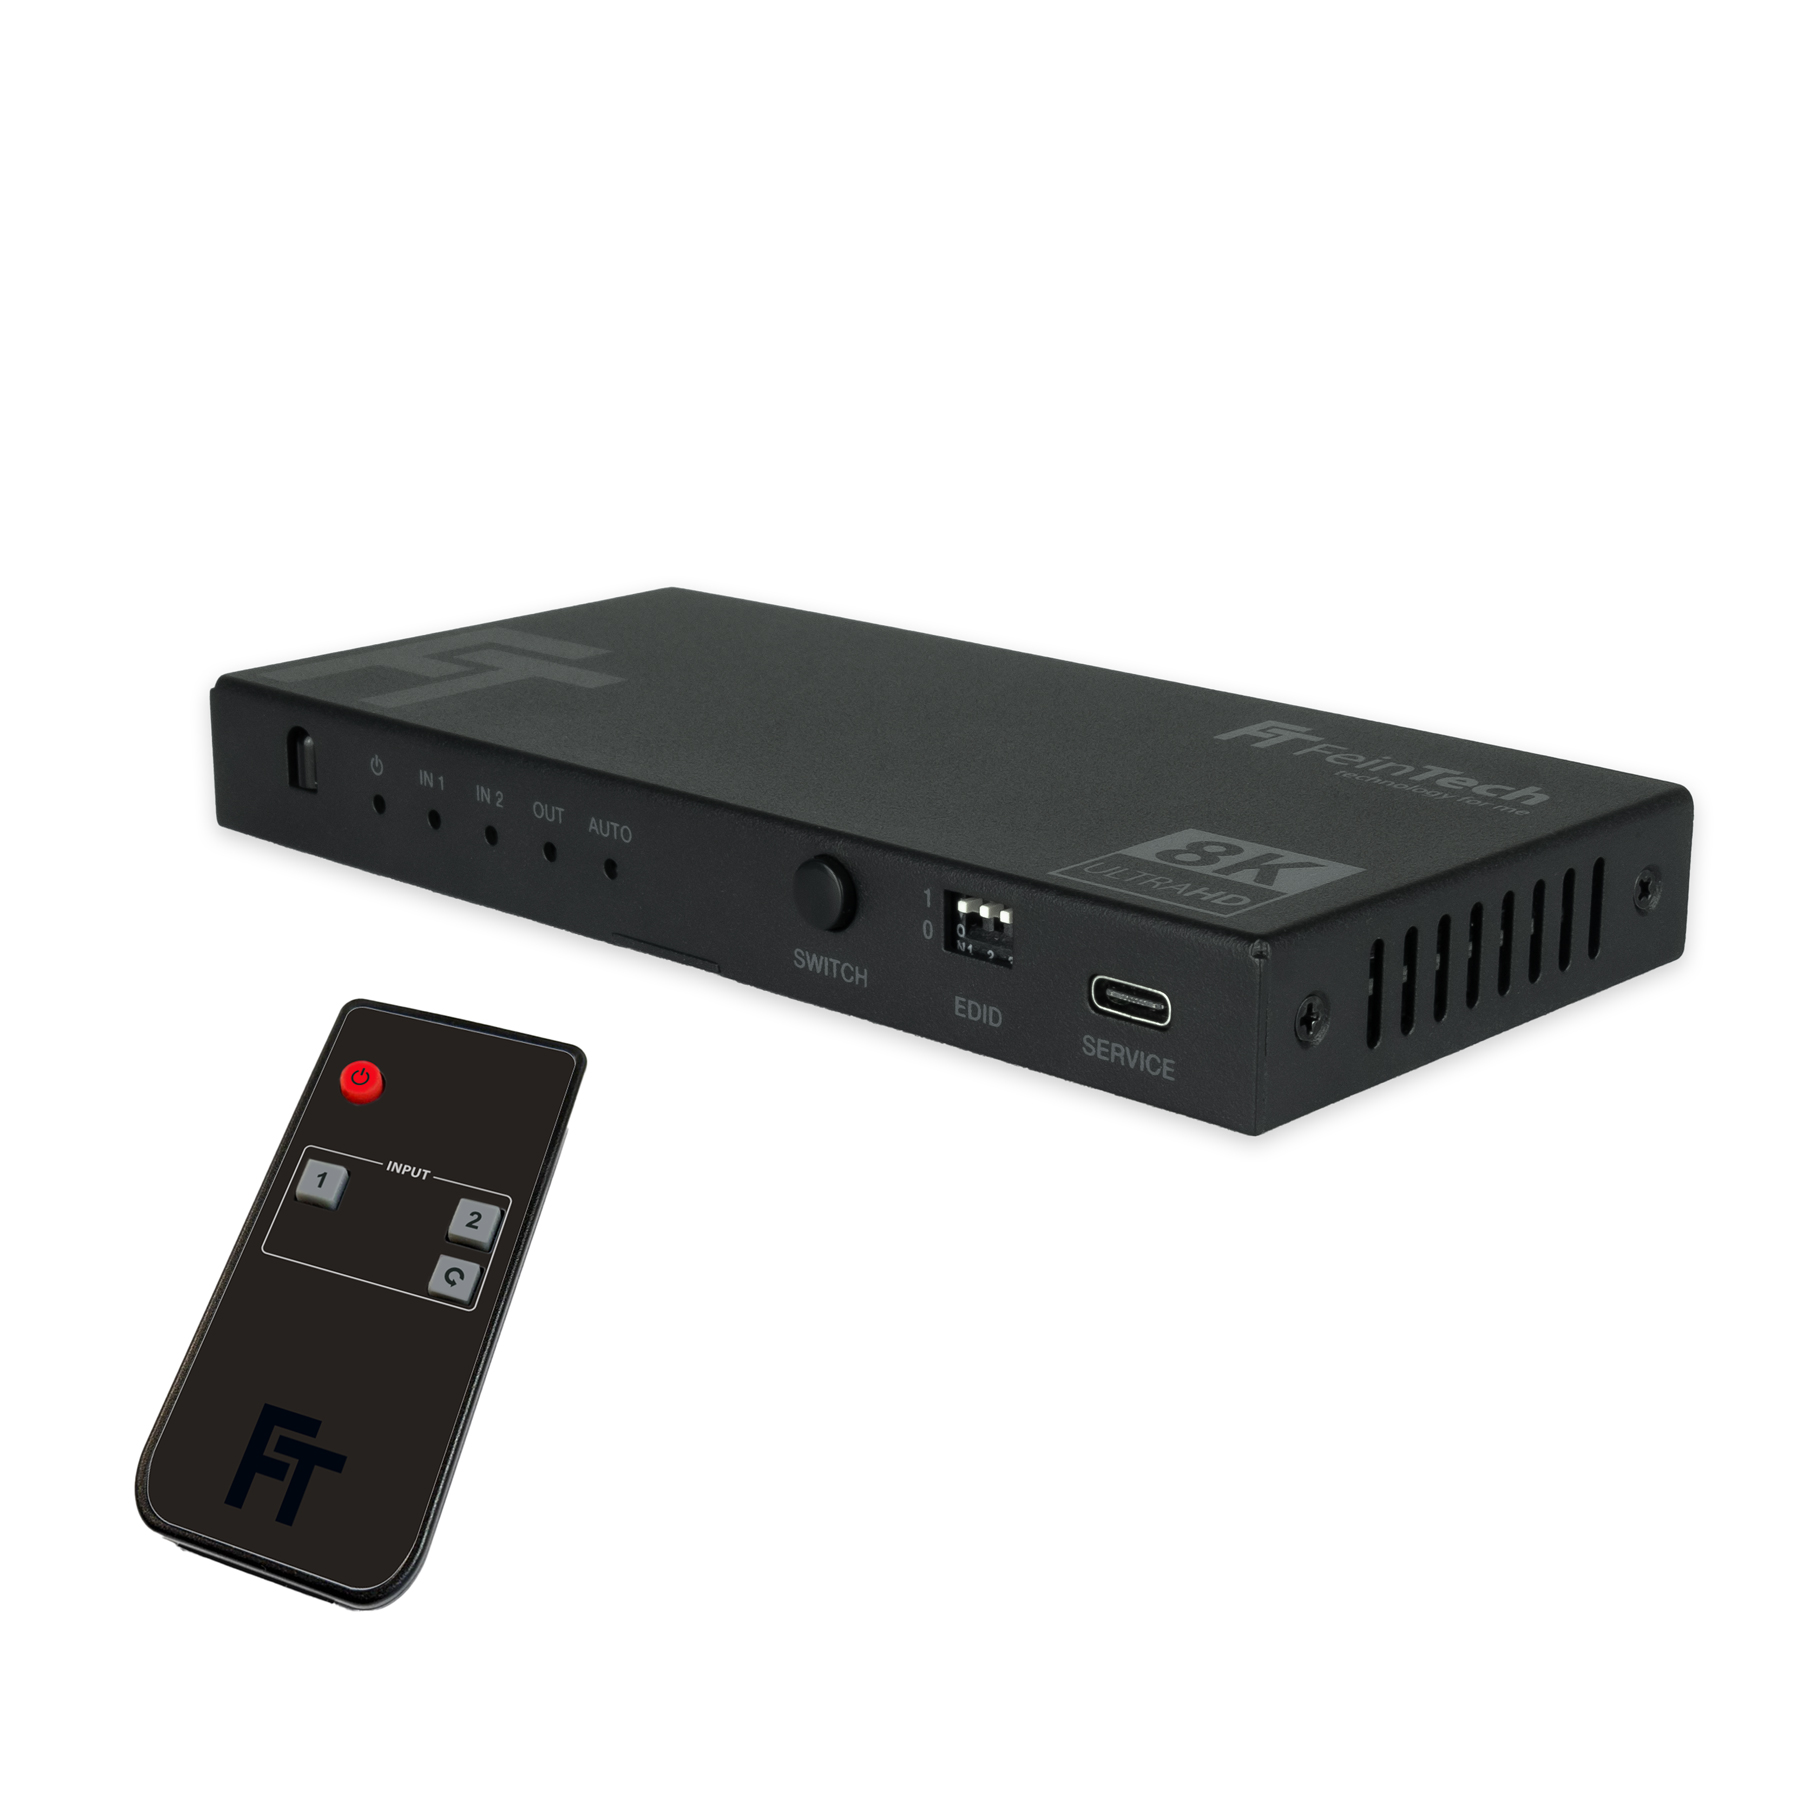 FEINTECH SW212 HDMI 2.1 Audio Switch 2x1 Extractor + Switch HDMI